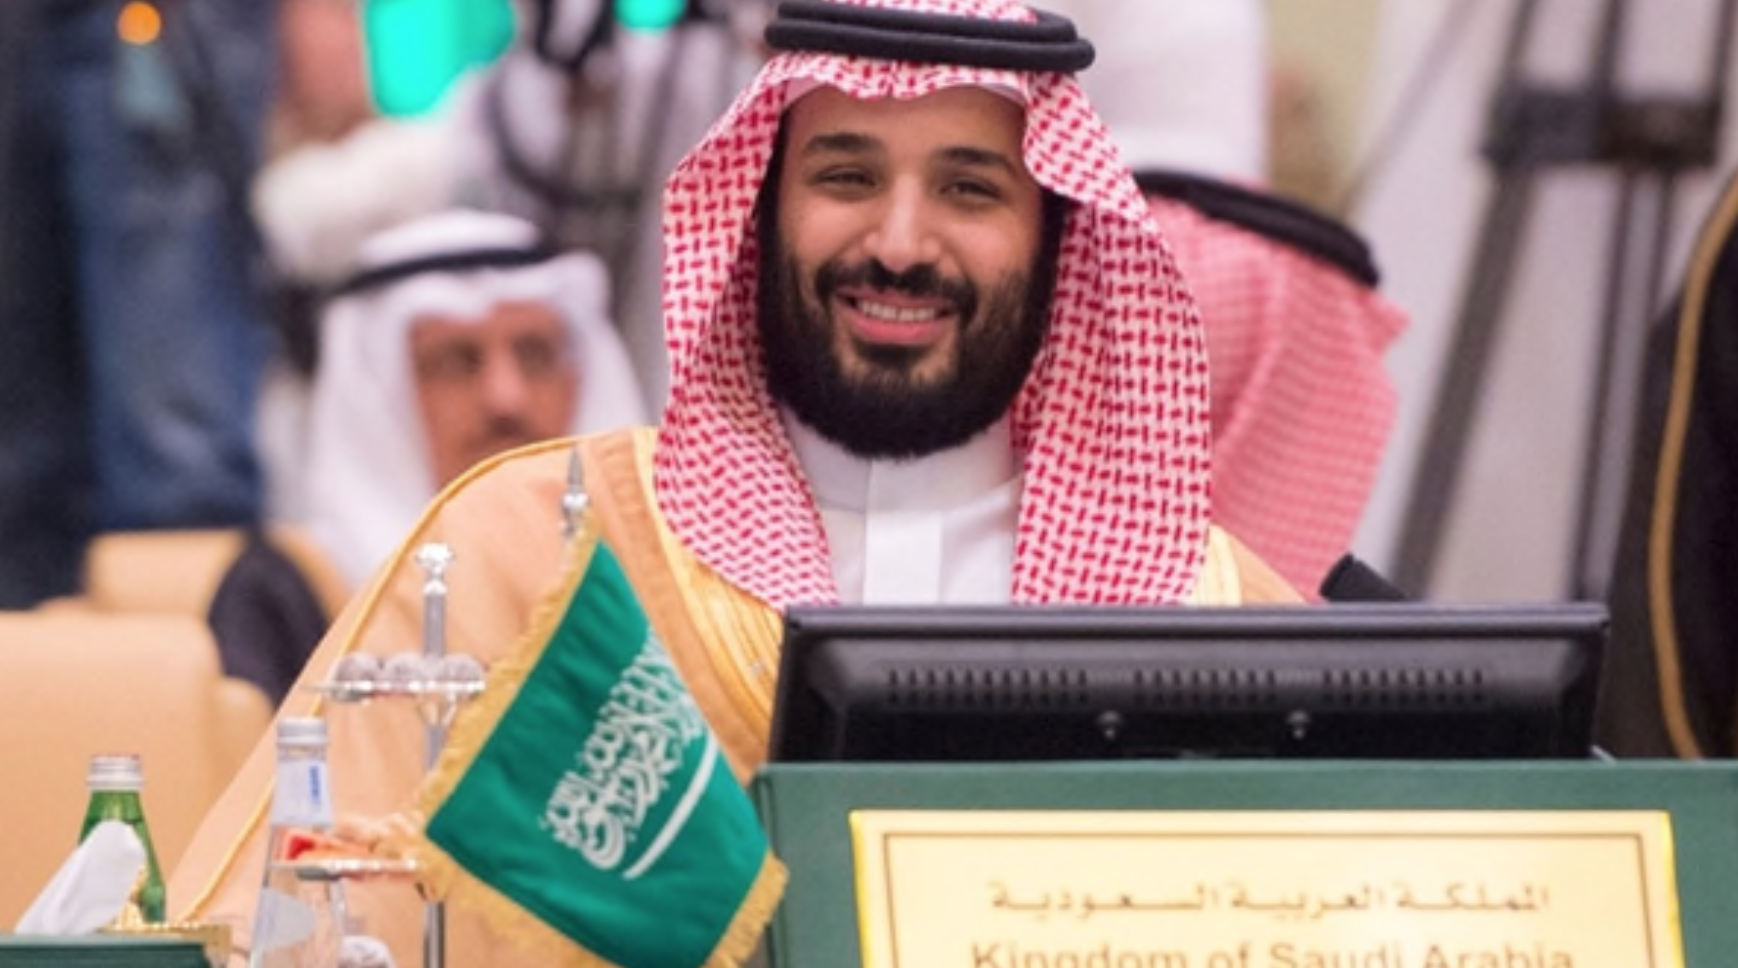 g20, príncipe arabia saudita